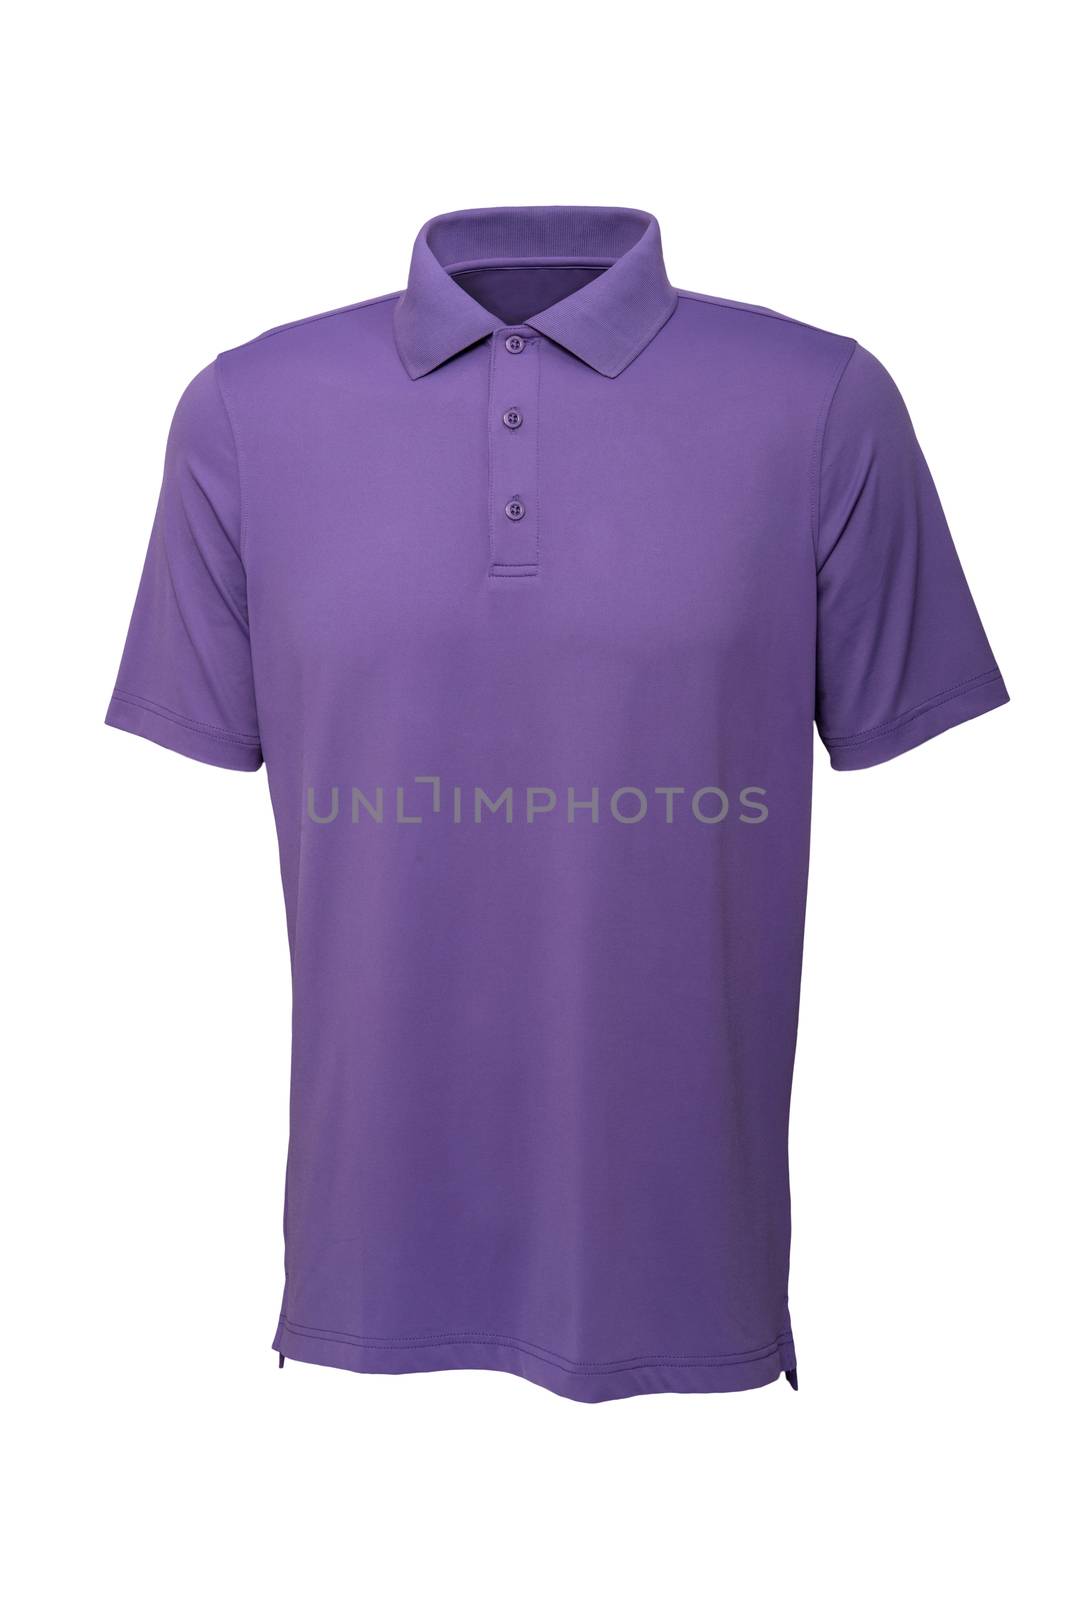 Golf purple tee shirt for man or woman by praethip